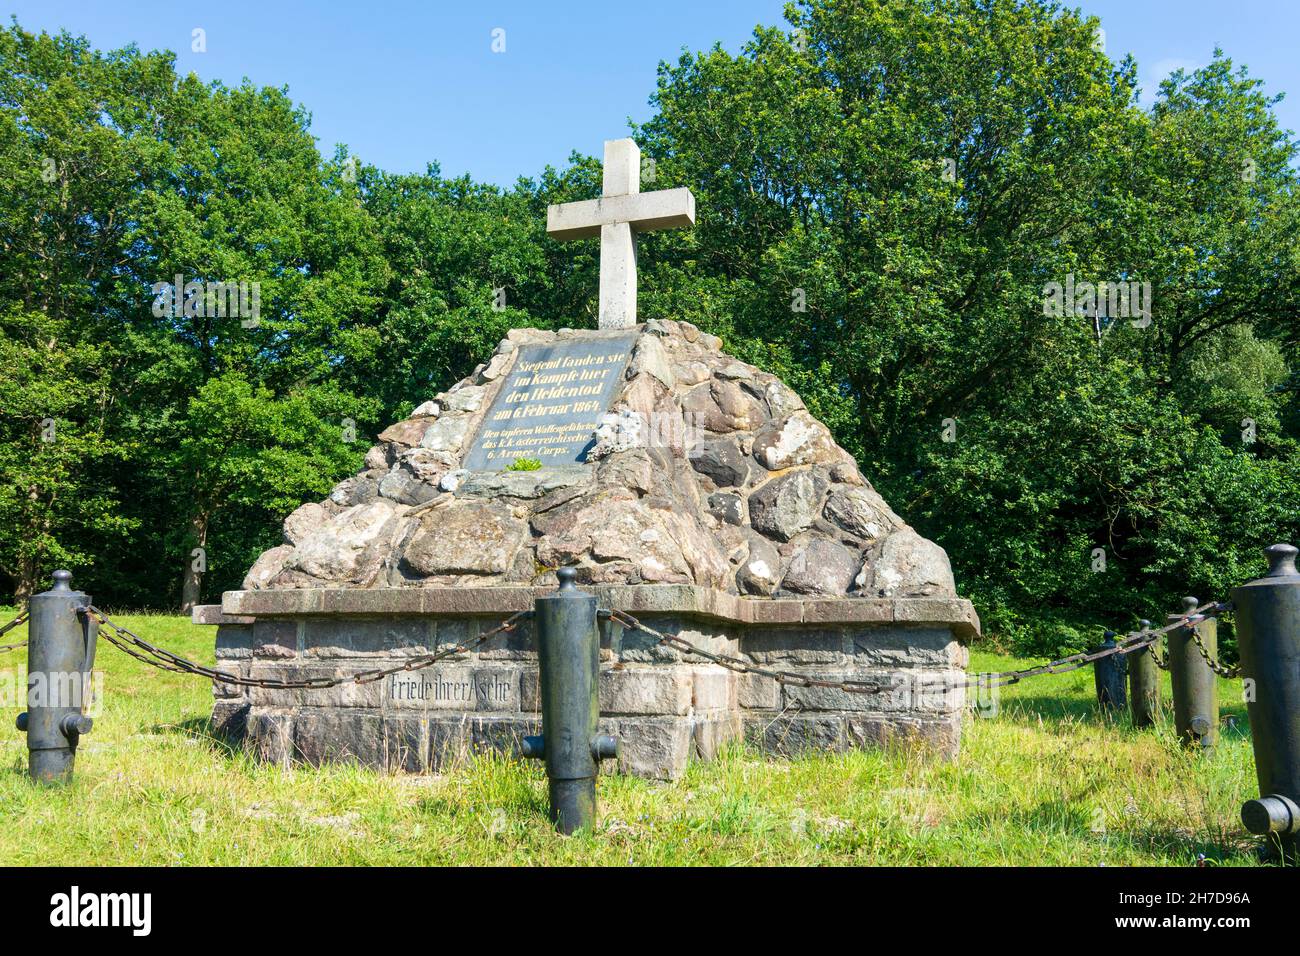 Oeversee: Monument autrichien de la bataille de Sankelmark (ou bataille d'Oeversee) à Binnenland, Schleswig-Holstein, Allemagne Banque D'Images